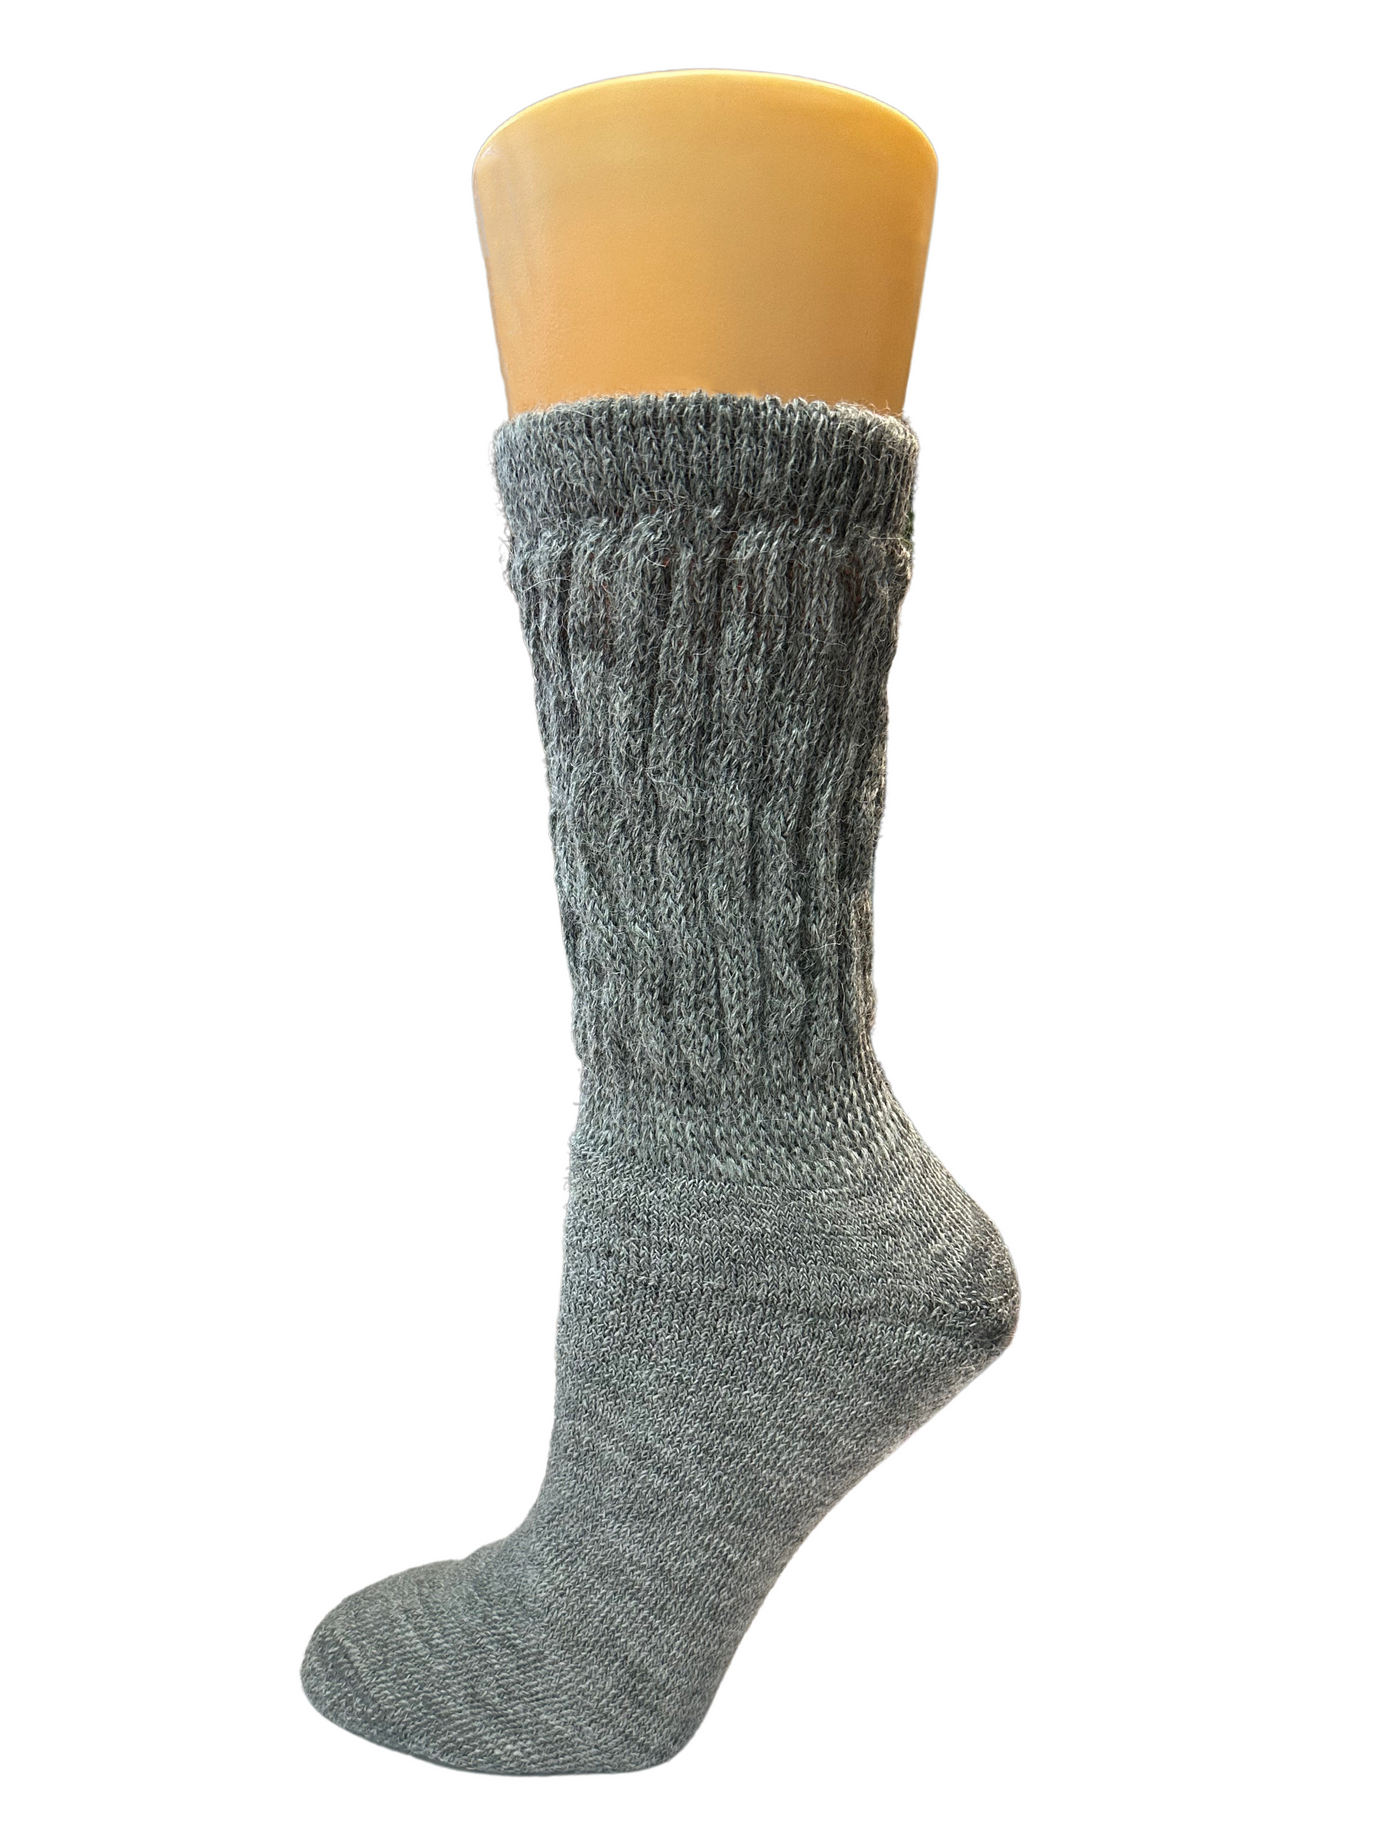 Spacedye Alpaca Socks  Extra-soft, Thermoregulating, Odor-proof